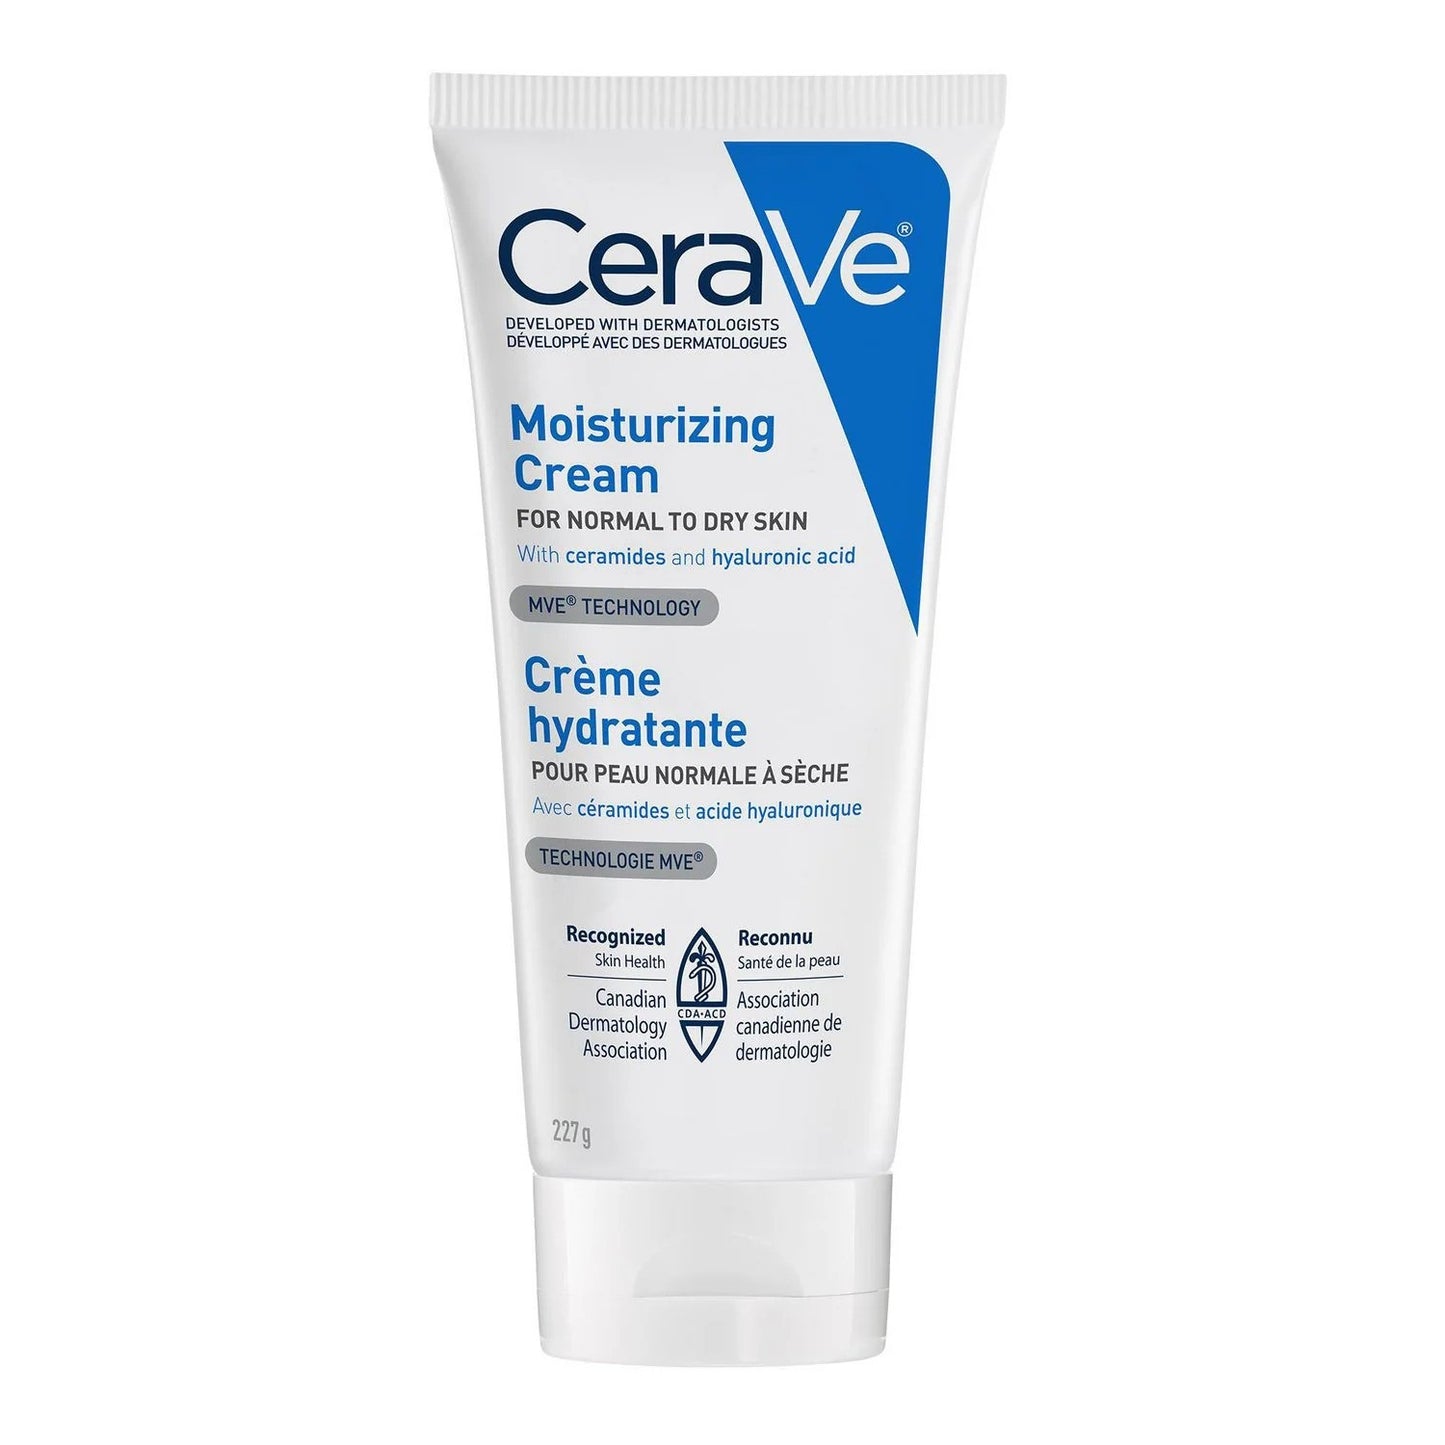 CeraVe CeraVe Moisturizing Cream